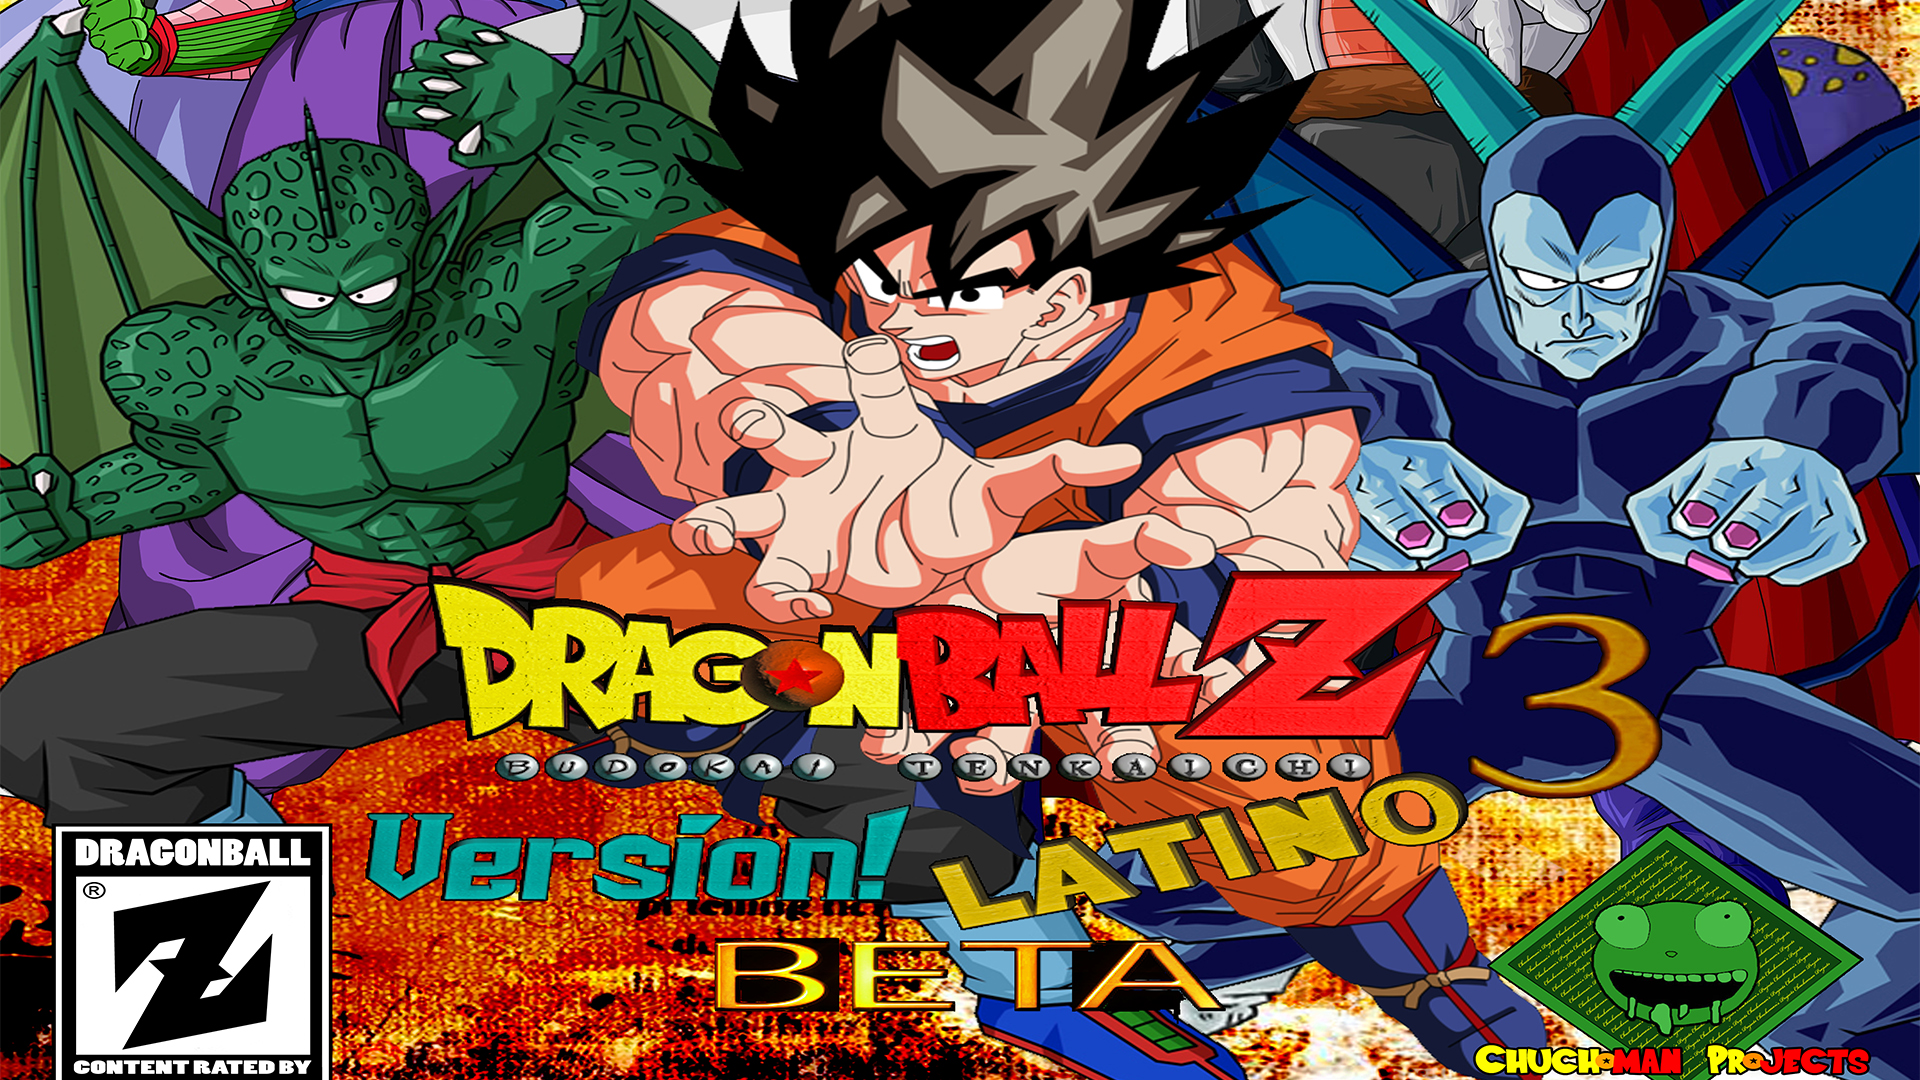 Dragon Ball Z Budokai Tenkaichi 3 Version Latino - PS2 ROM - Download